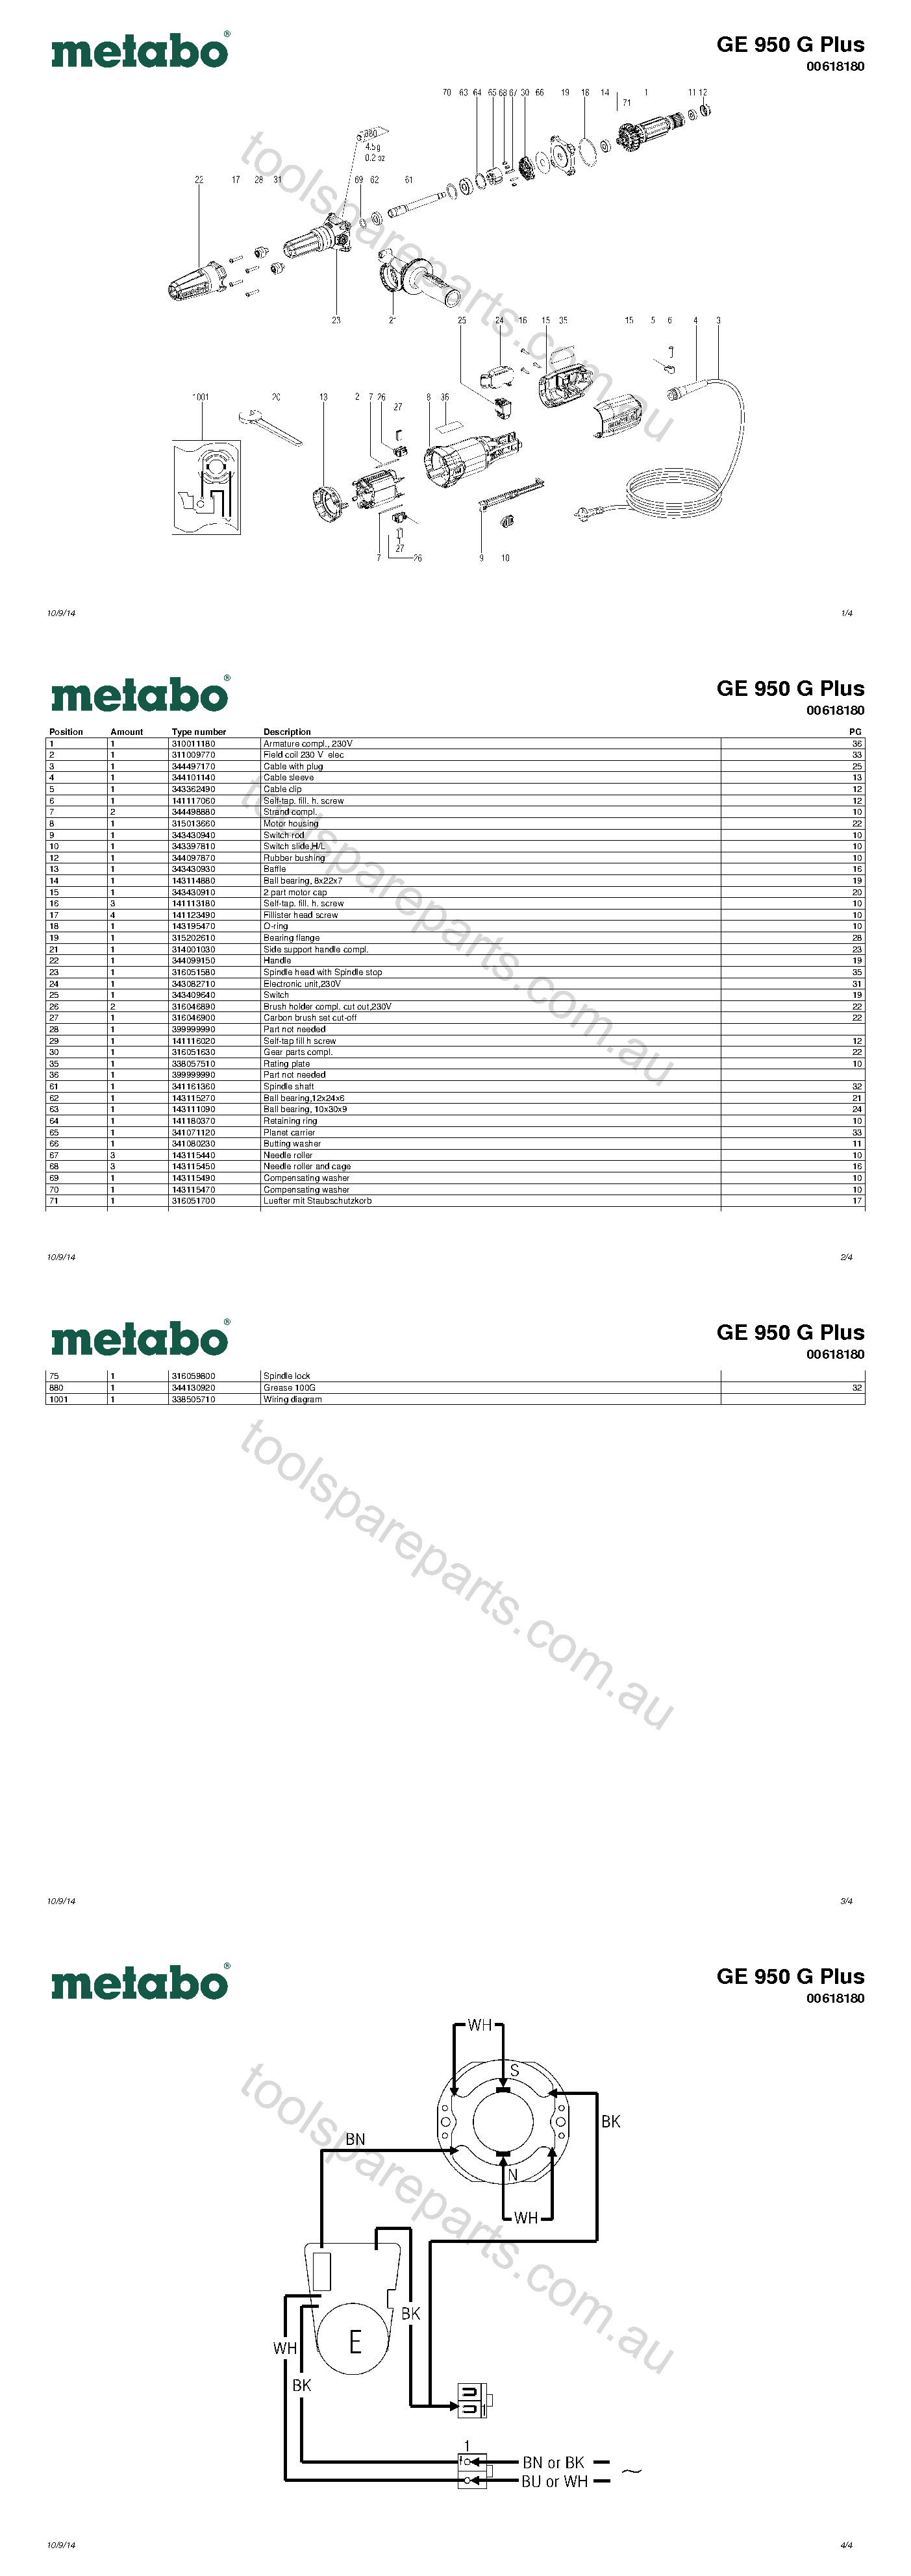 Metabo GE 950 G Plus 00618180  Diagram 1